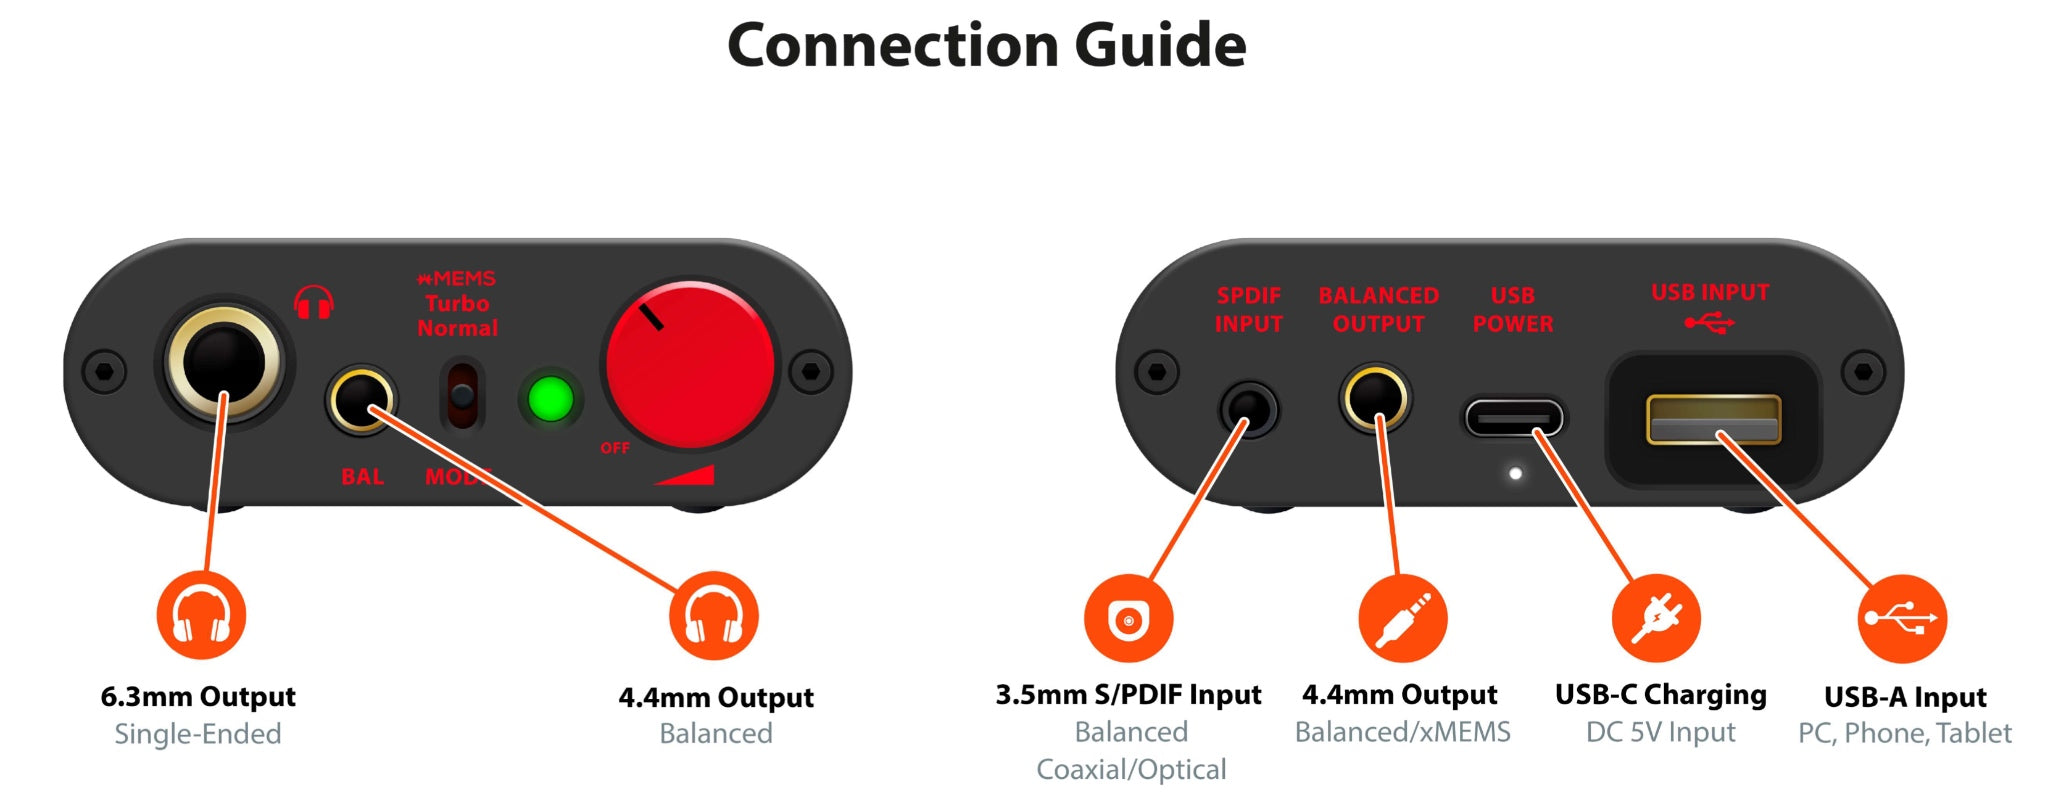 iFi Diablo-X connection guide diagram